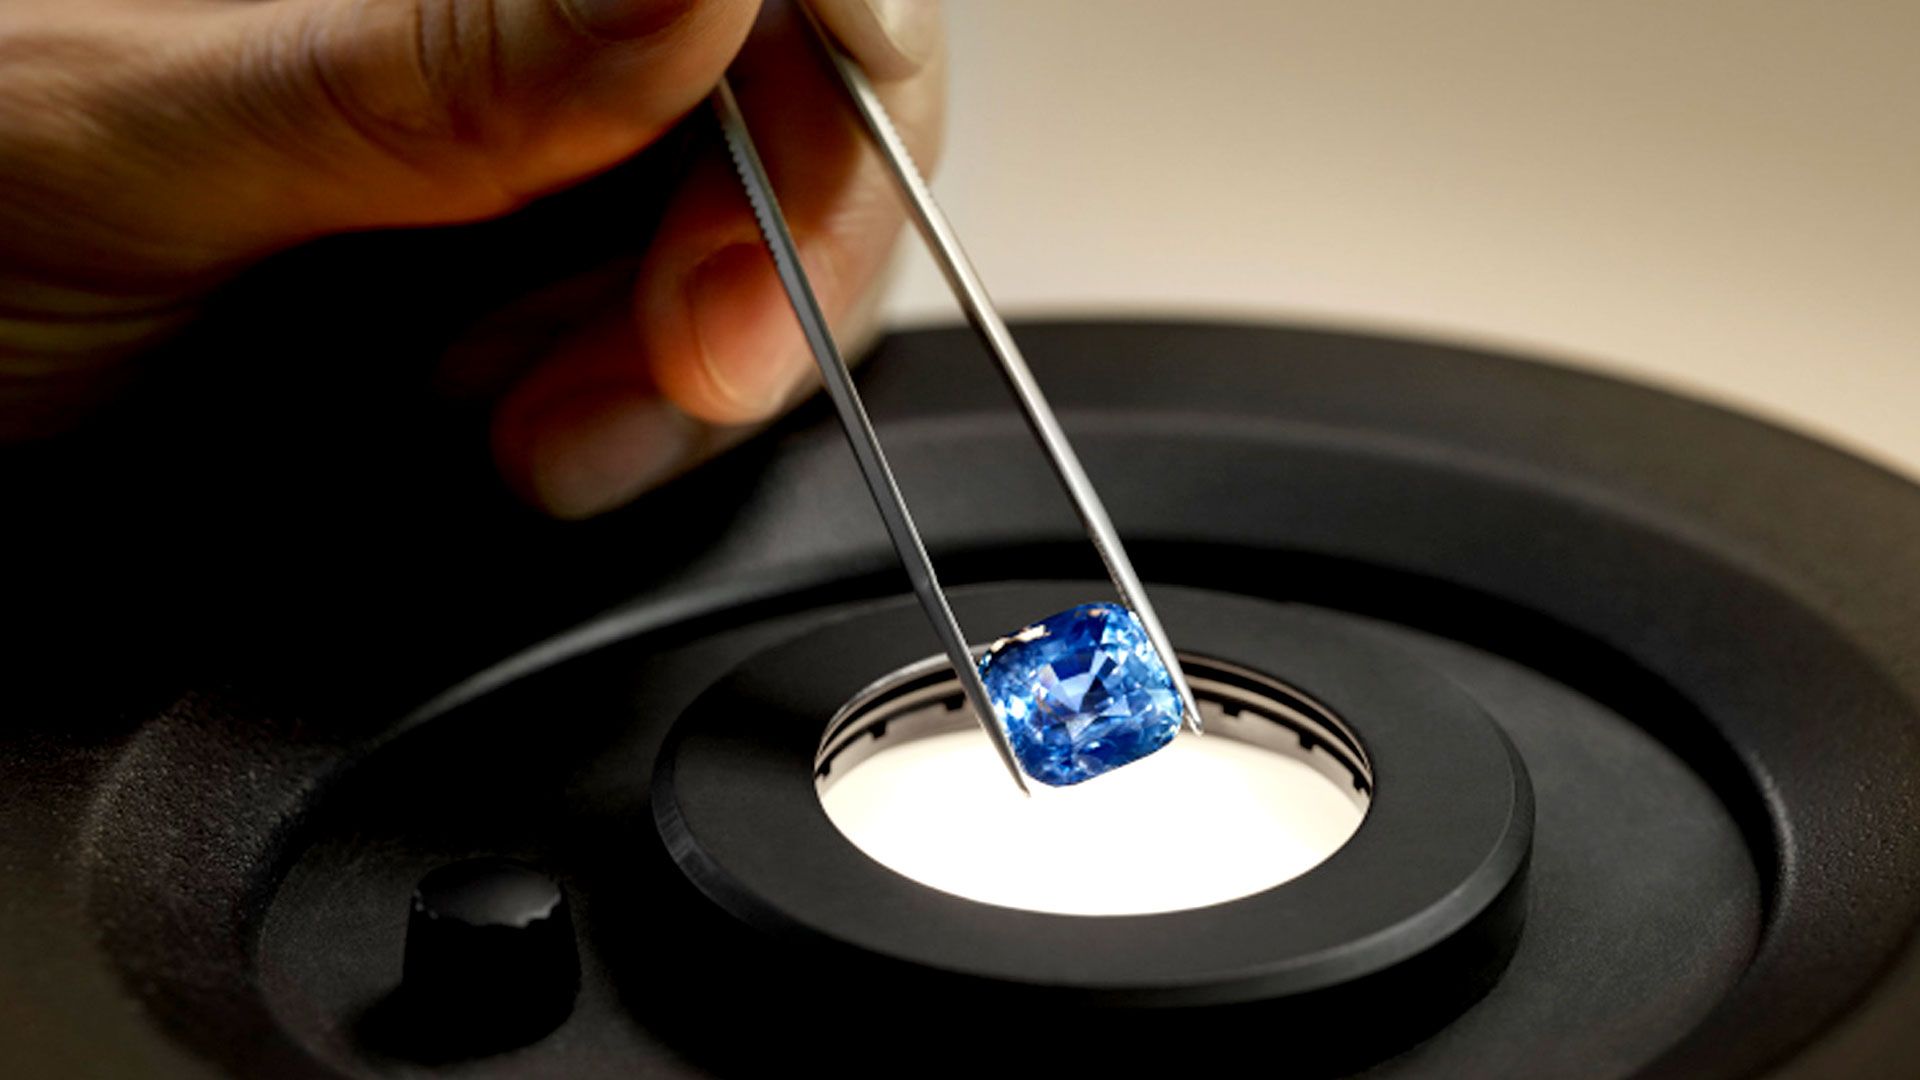 Sapphire gemstone testing